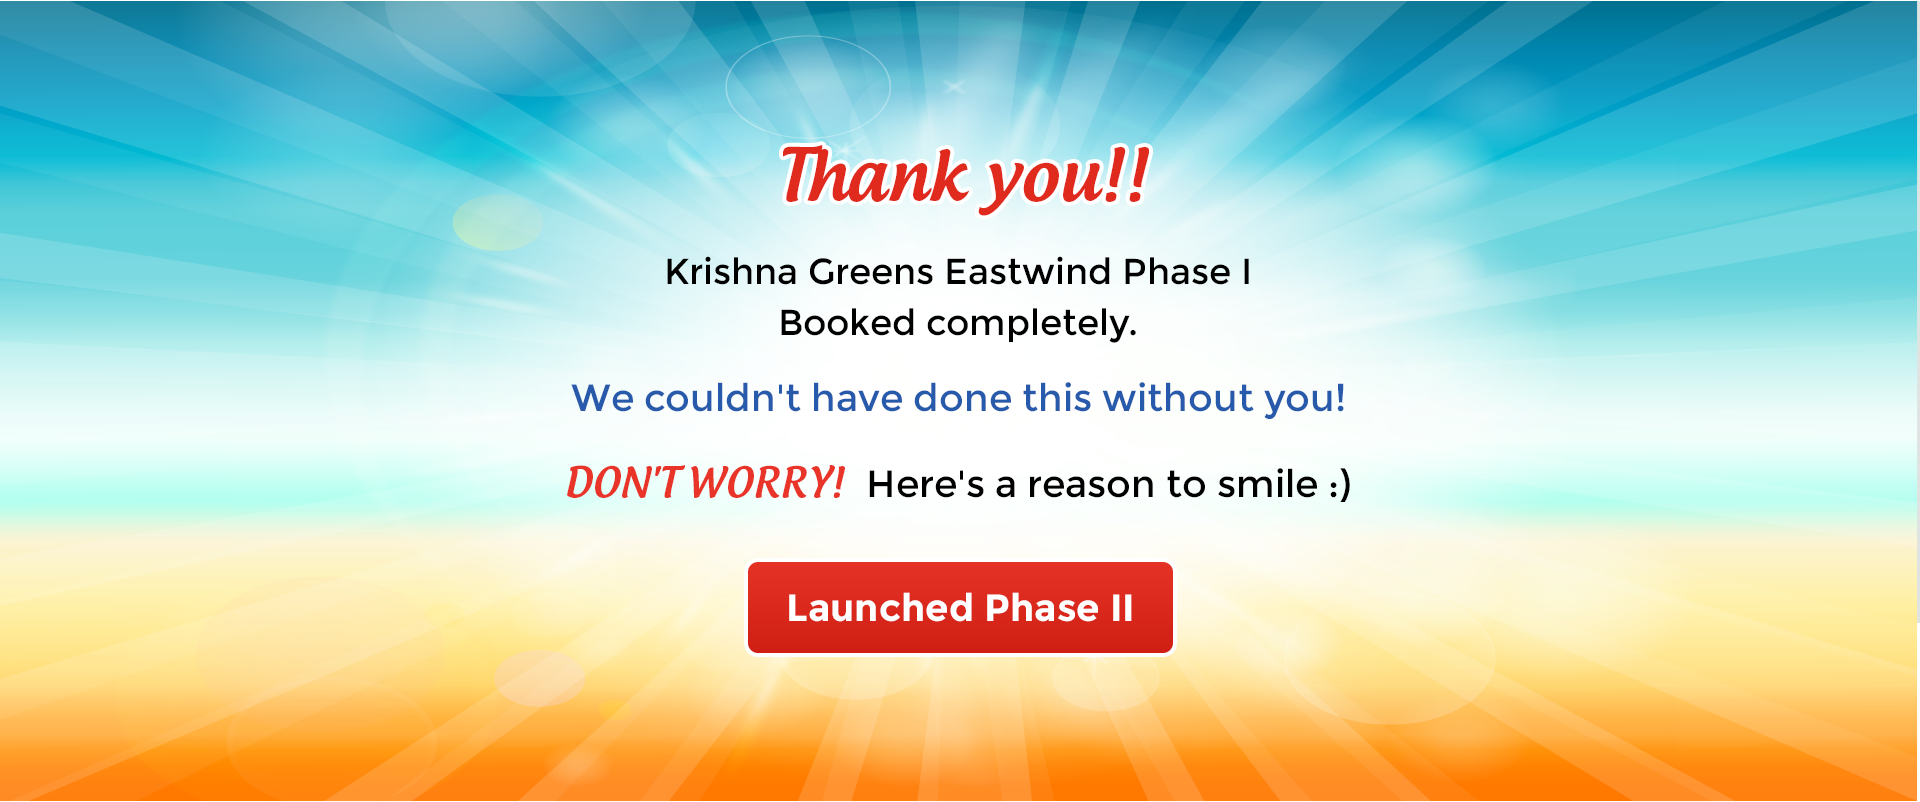 krishna-greens-eastwind-devanagundi